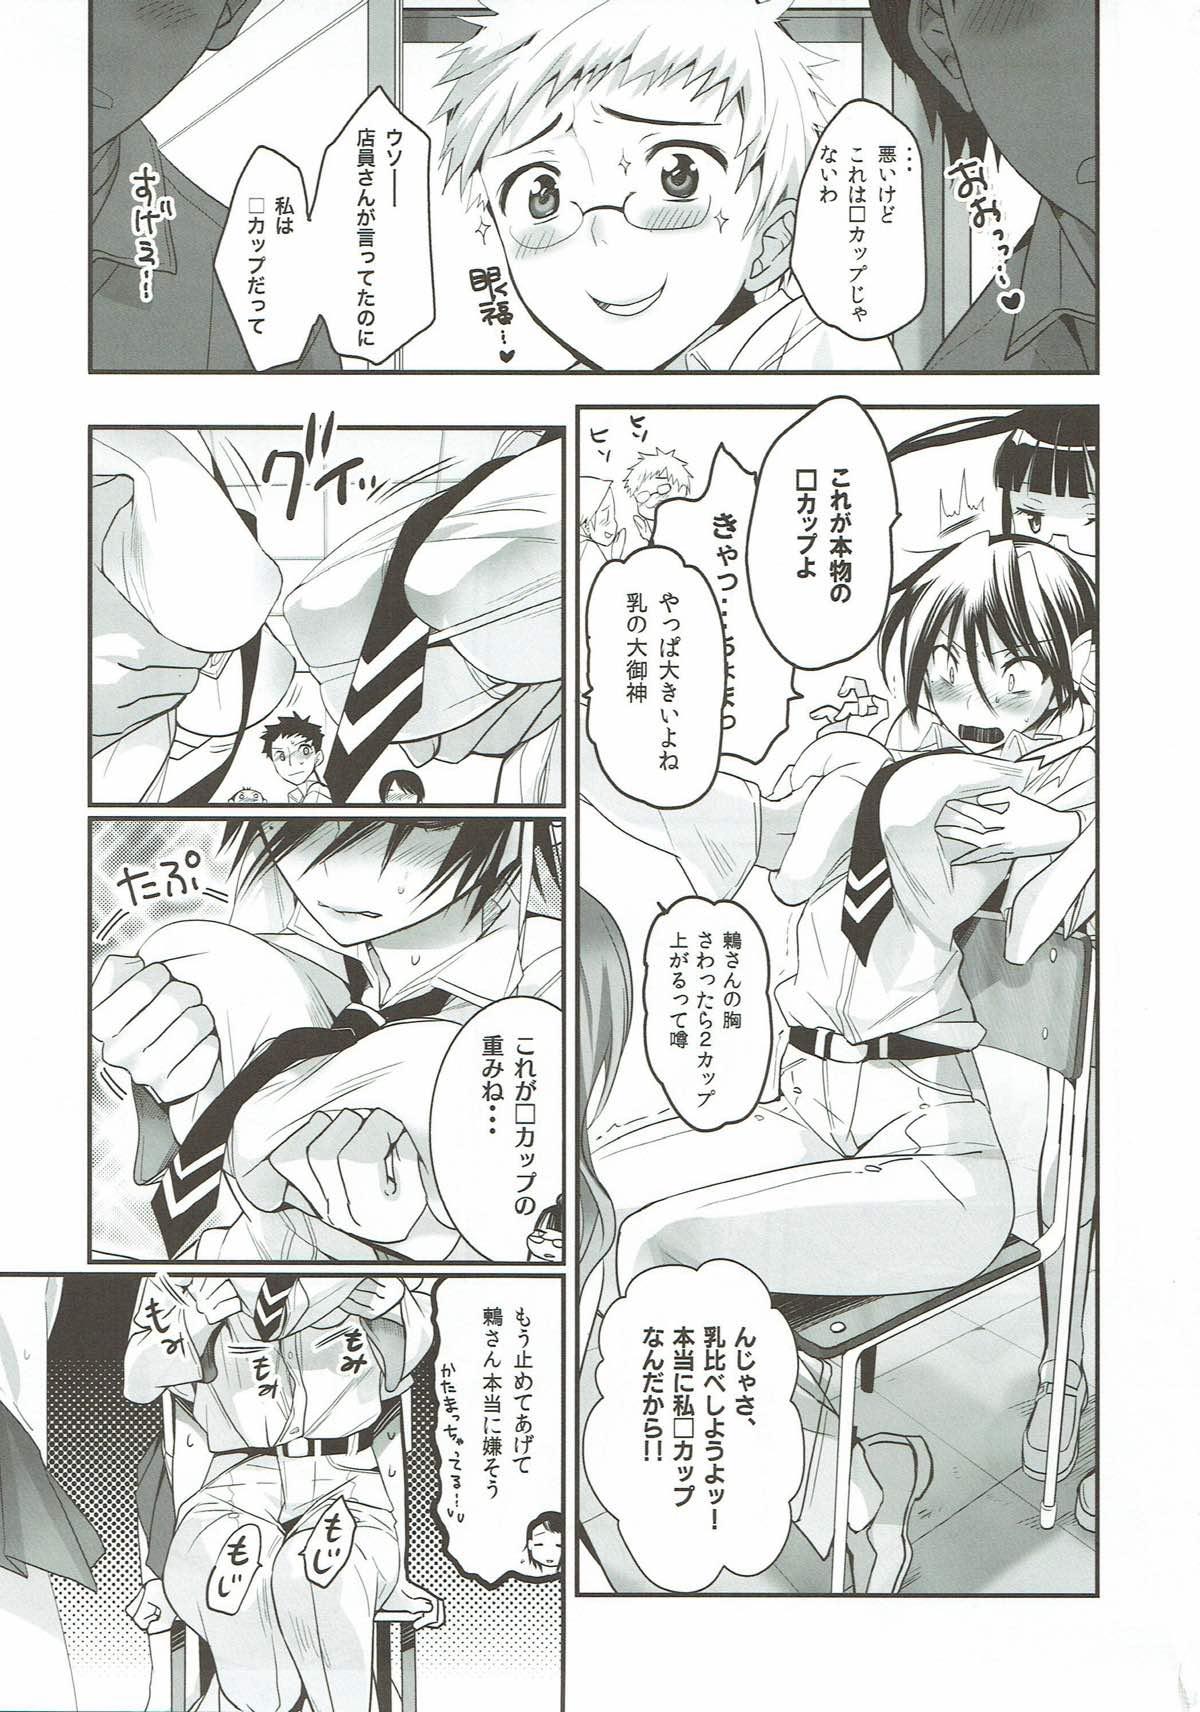 Titties Chichigami. - Nisekoi Super - Page 2